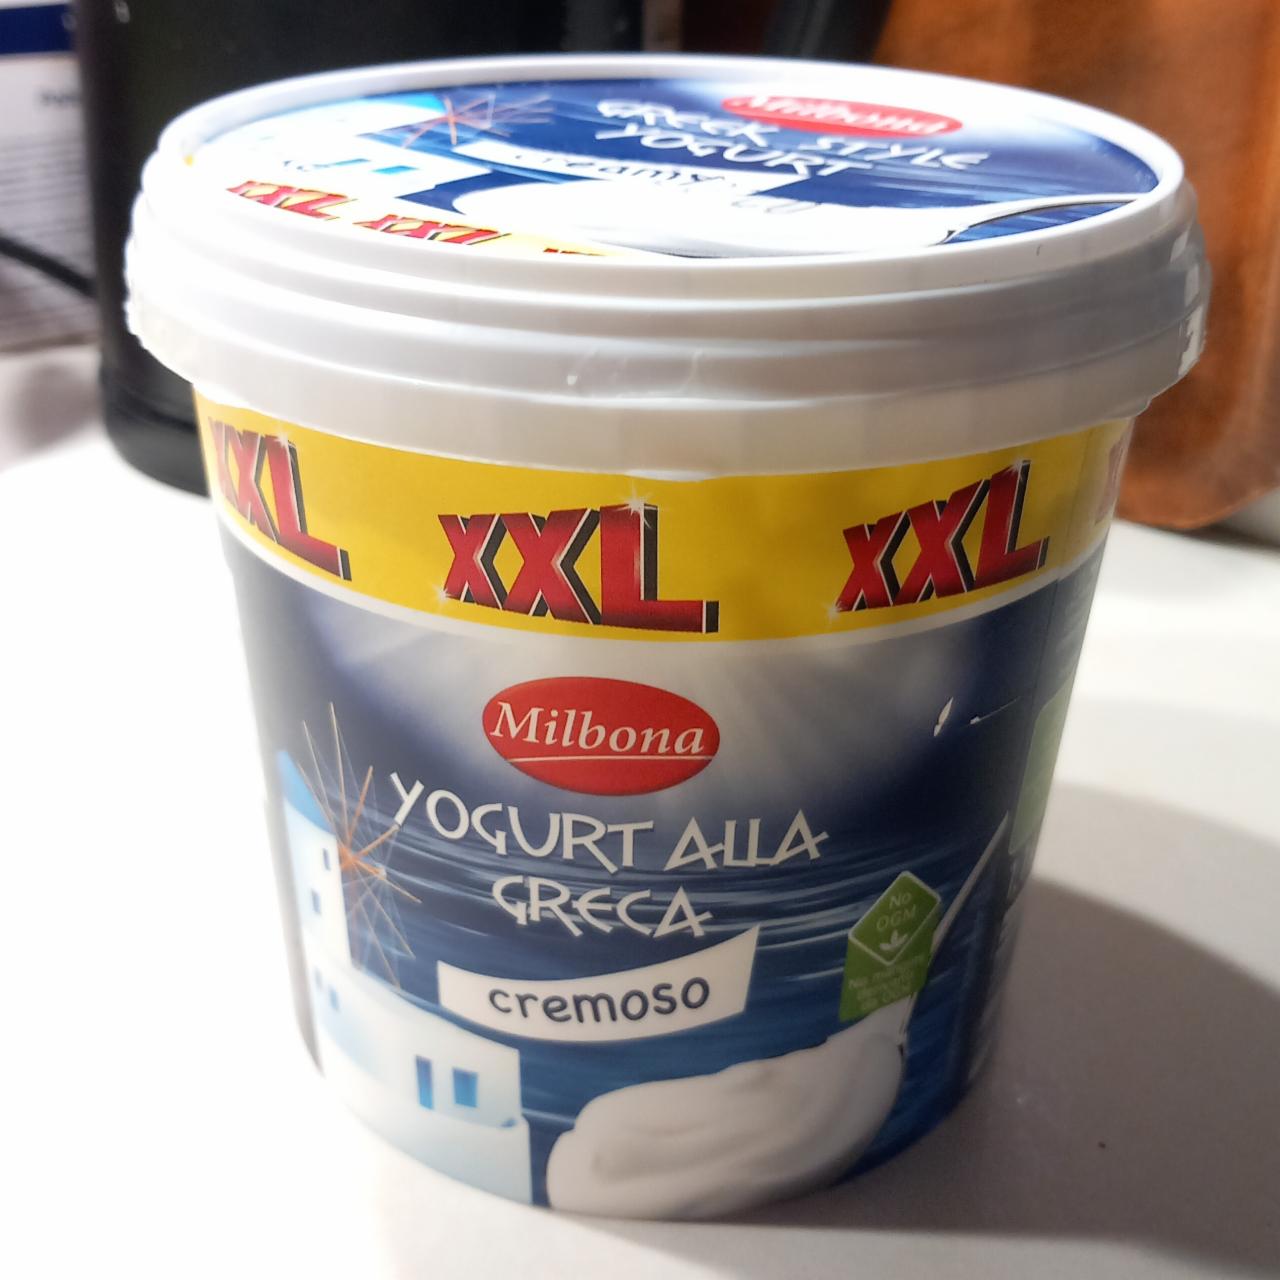 Фото - Yogurt alla greca cremoso Milbona